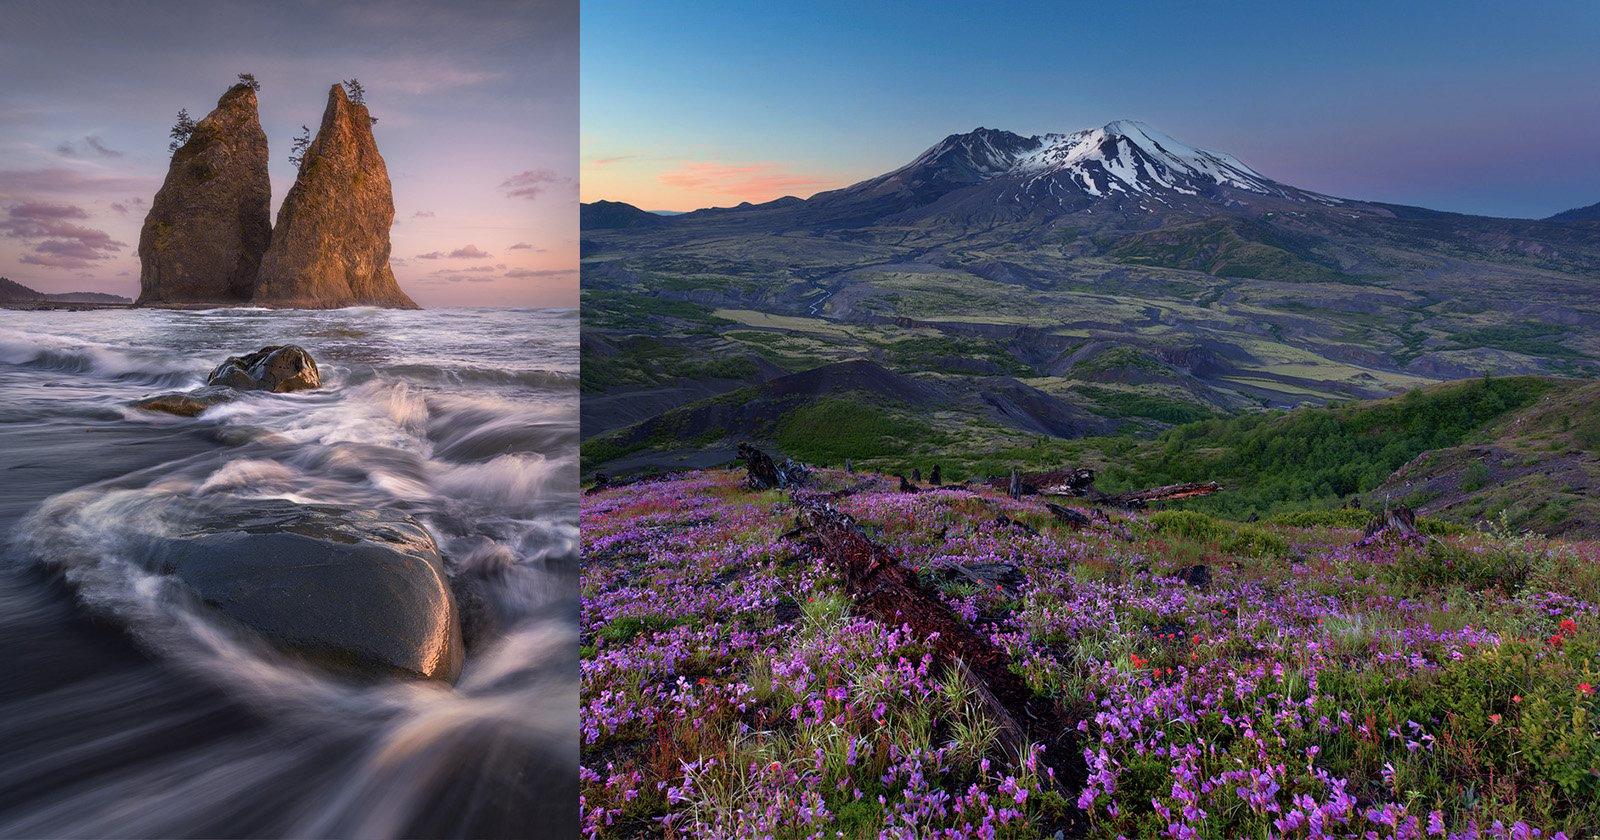 Washington State’s Striking Beauty Through the Eyes of seven Photographers